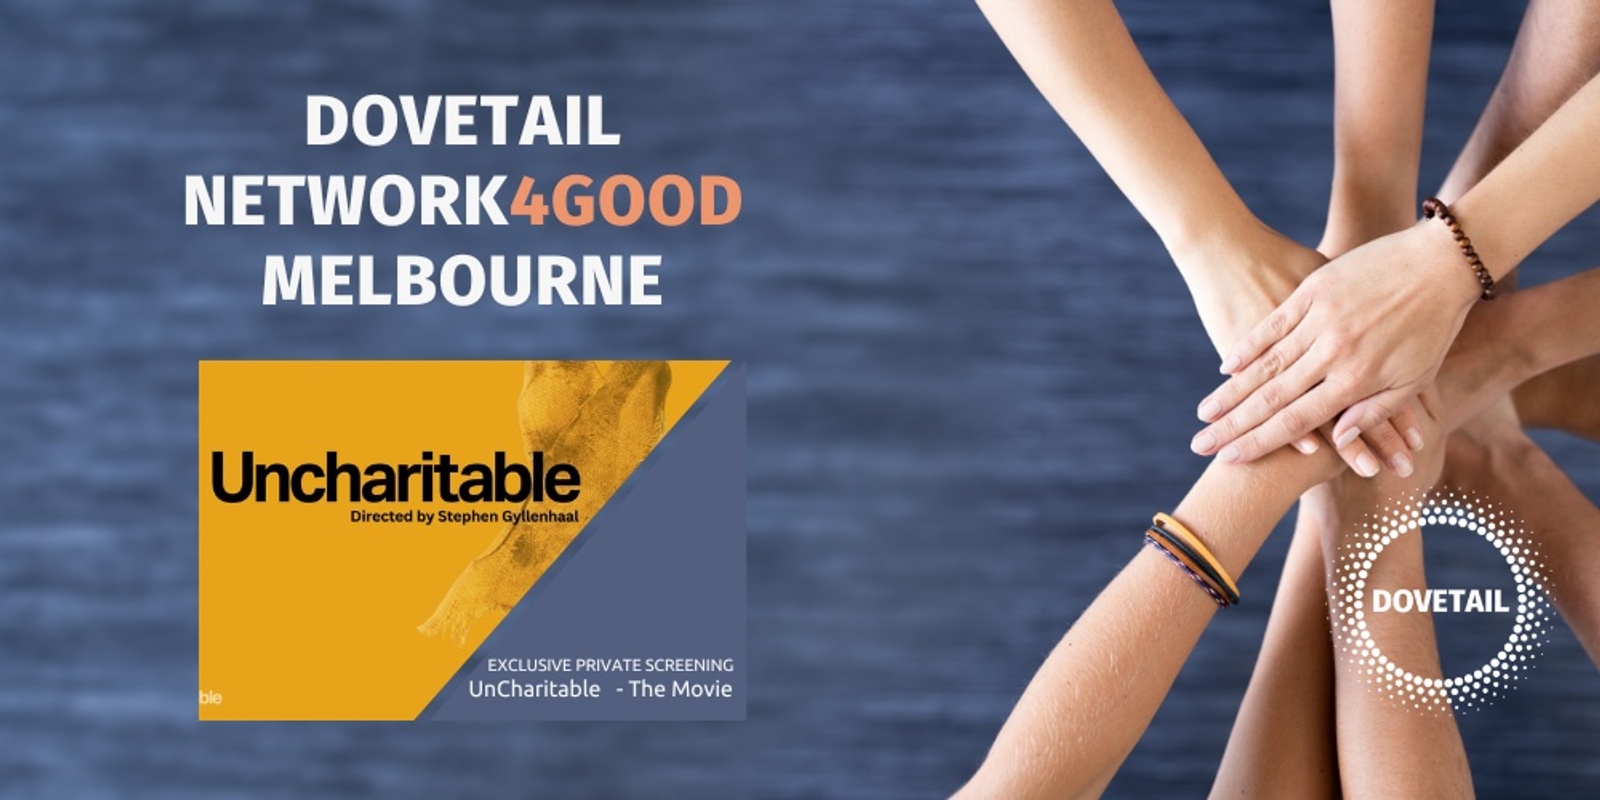 Banner image for Dovetail's Network4Good Melbourne